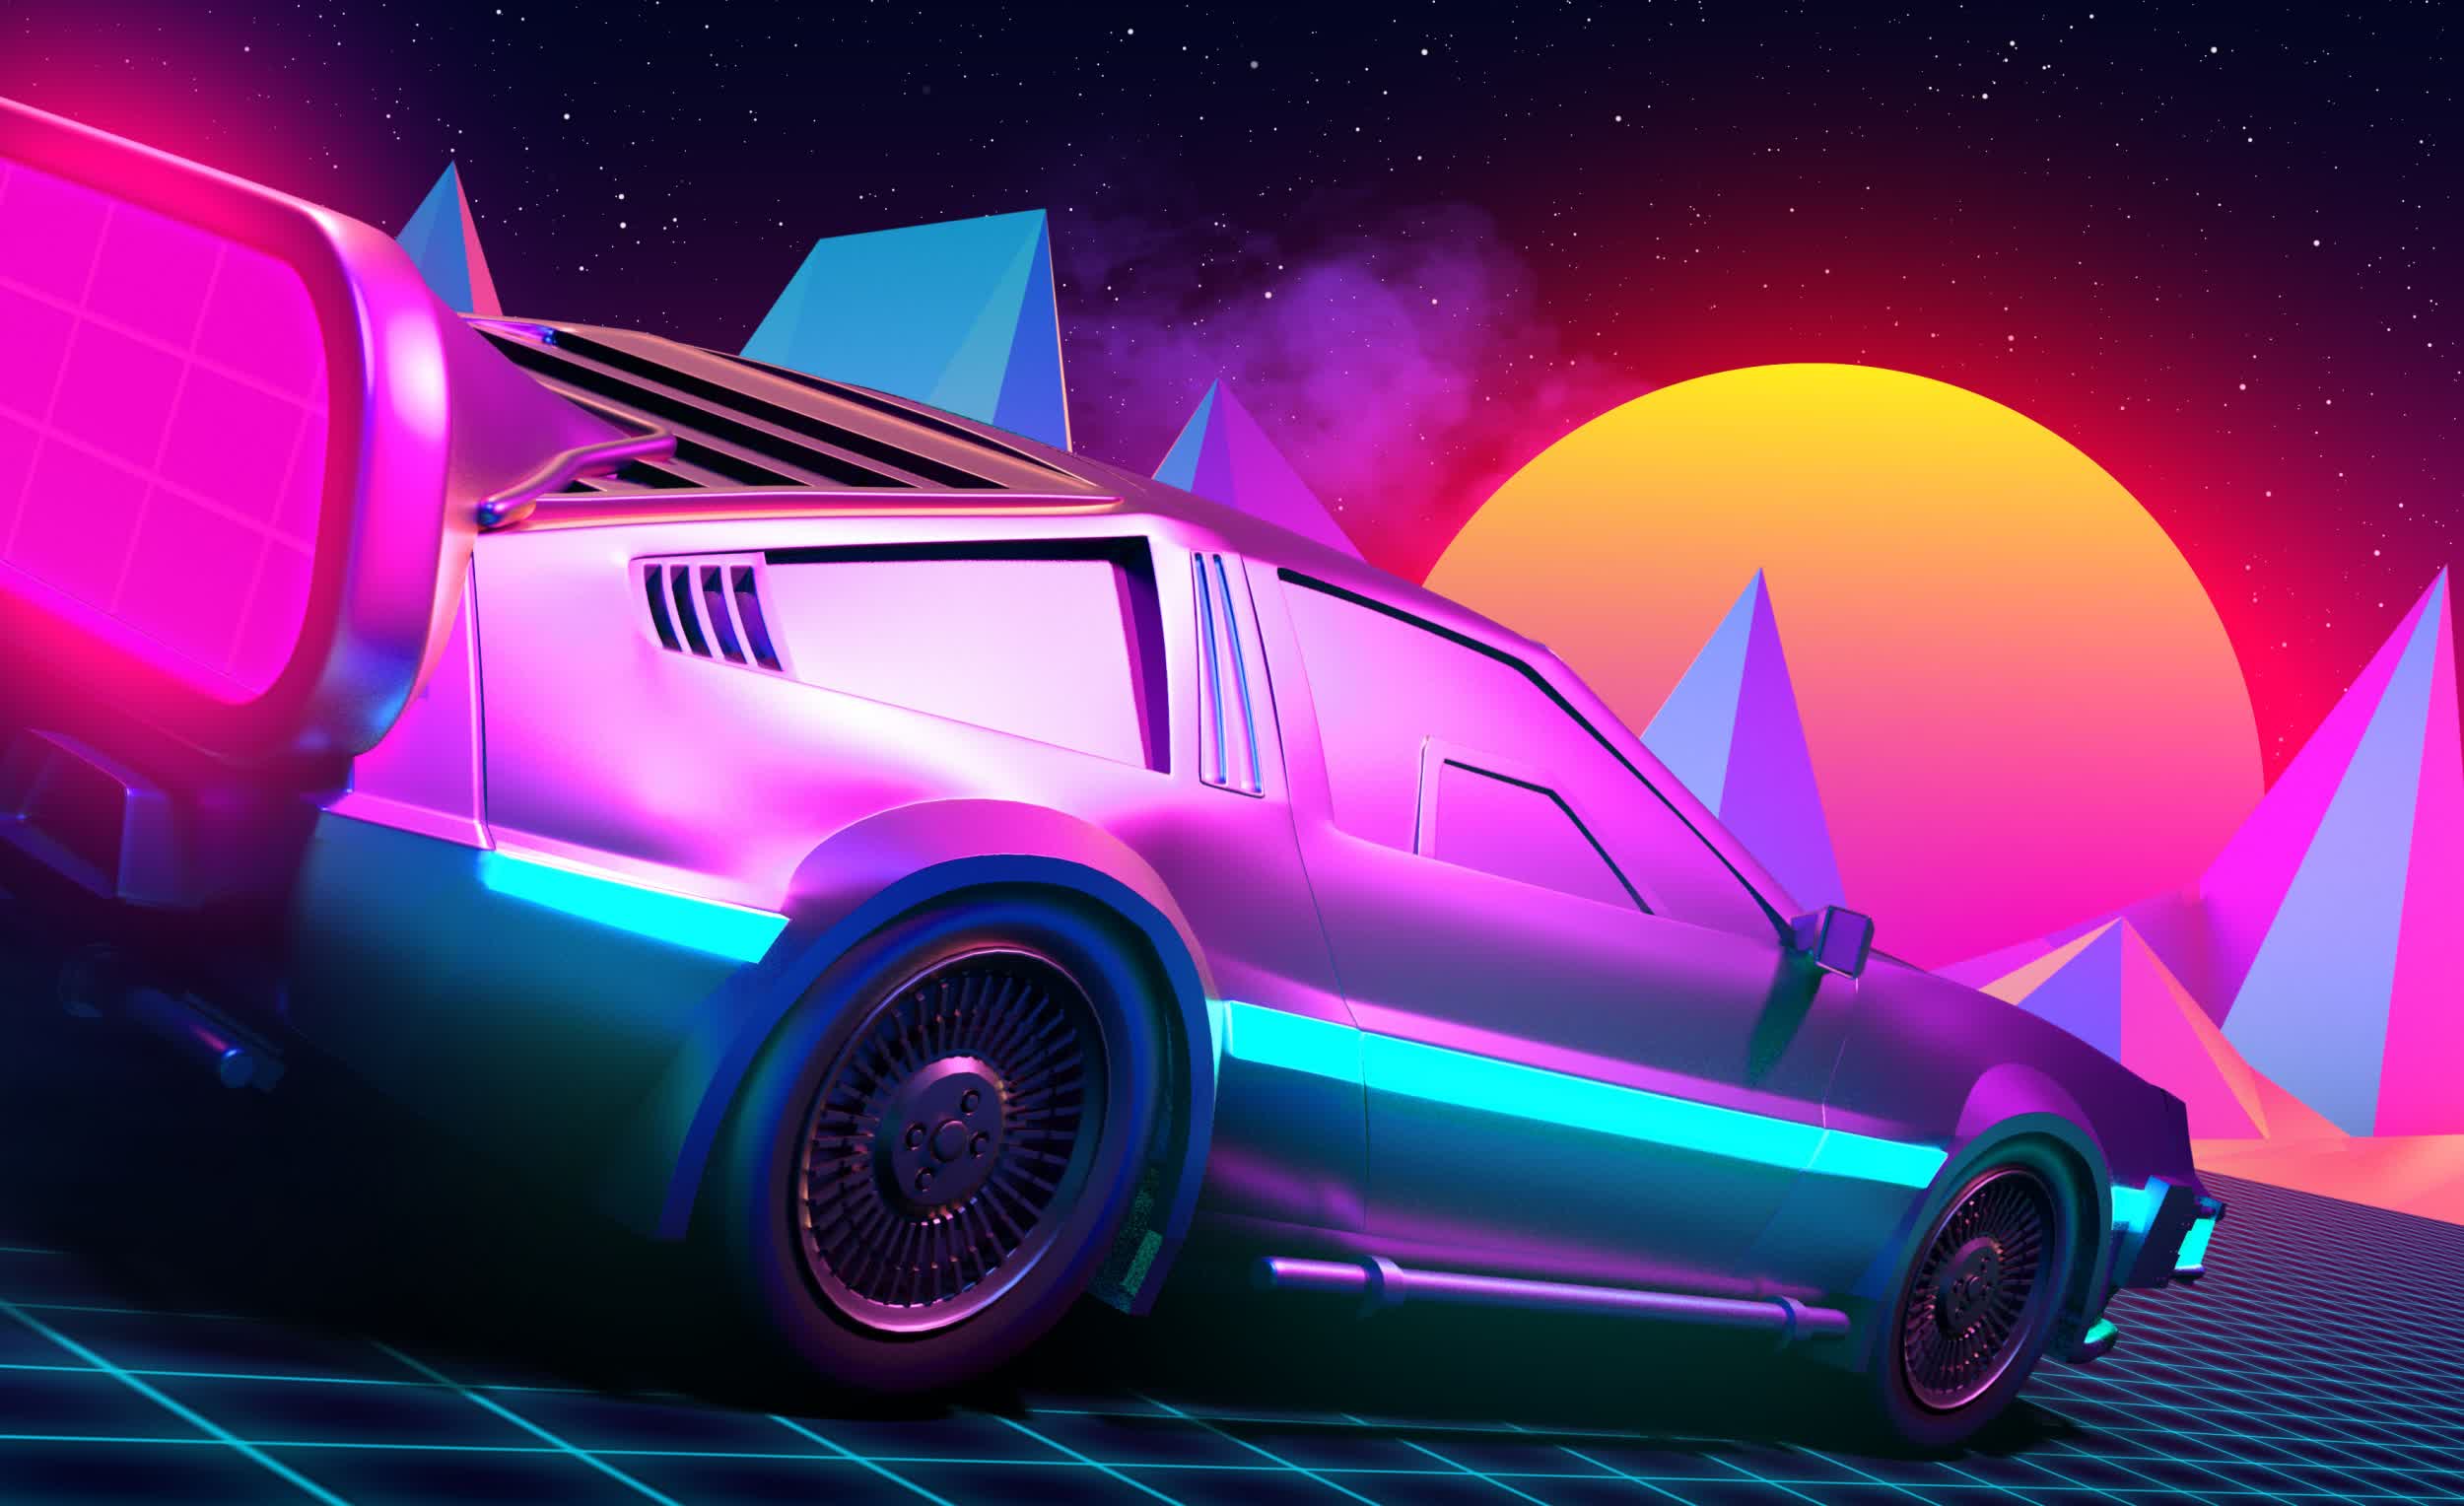 The DeLorean could make a comeback as an electric car